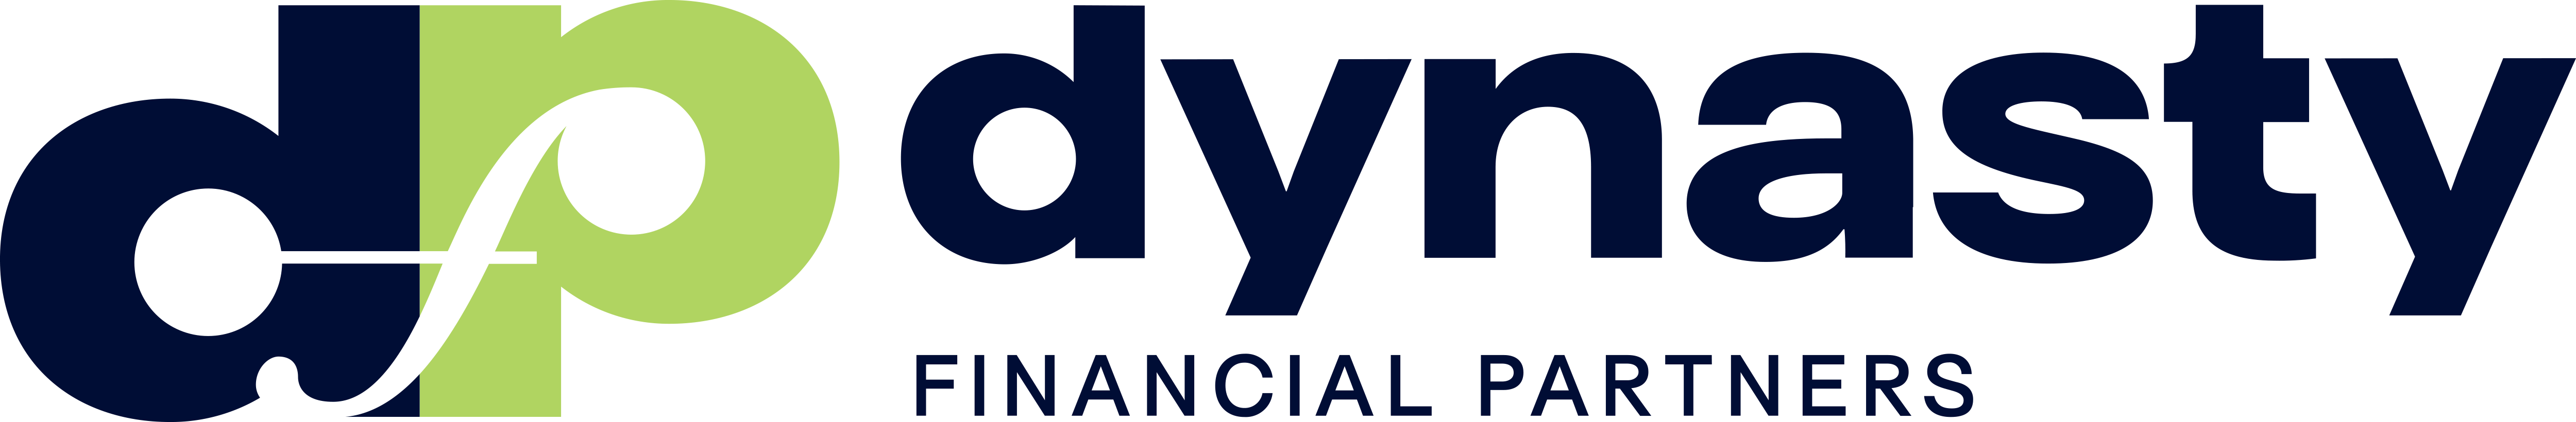 Dynasty Financial Partners